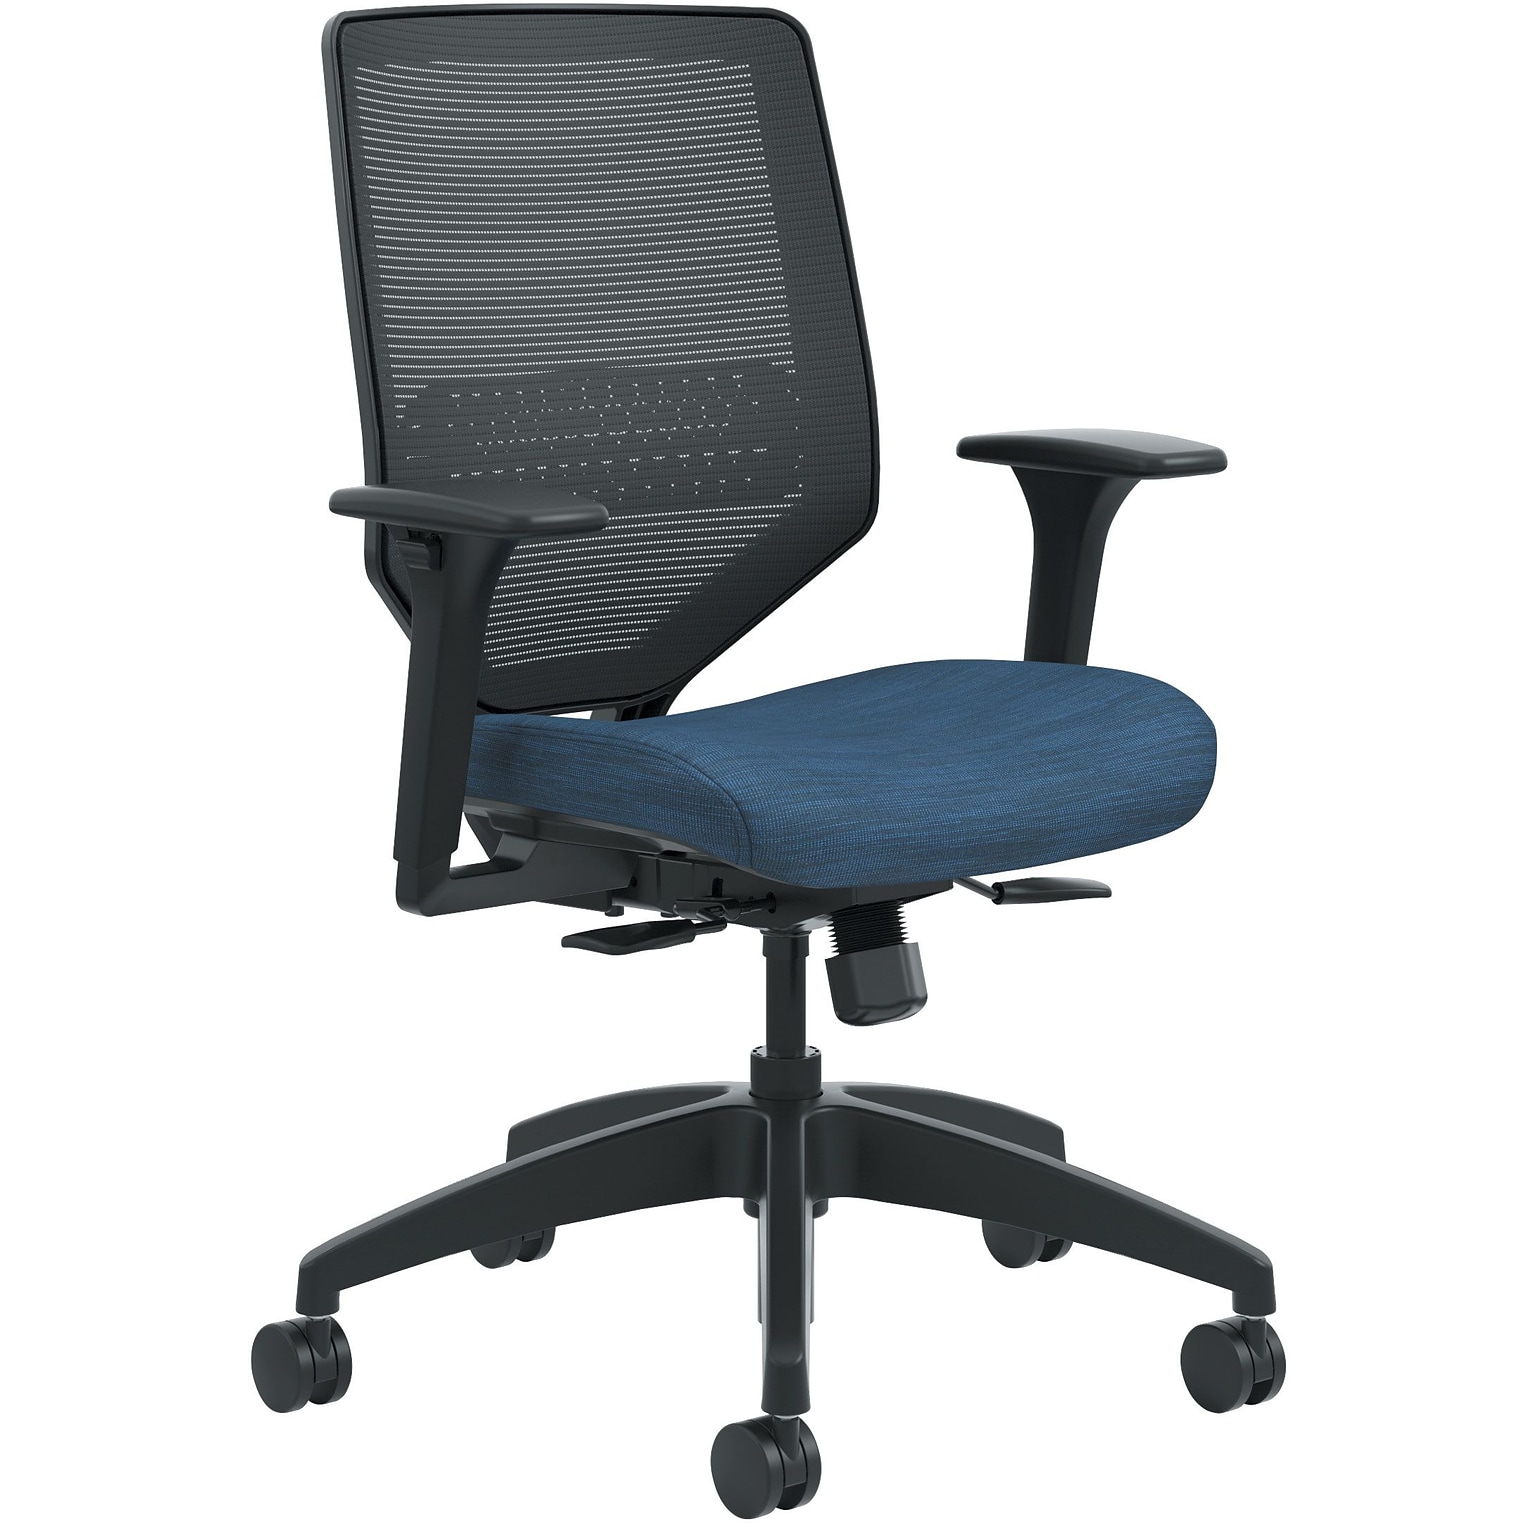 HON Solve ilira-Stretch Mesh/Fabric Mid-Back Task Chair, Black/Midnight